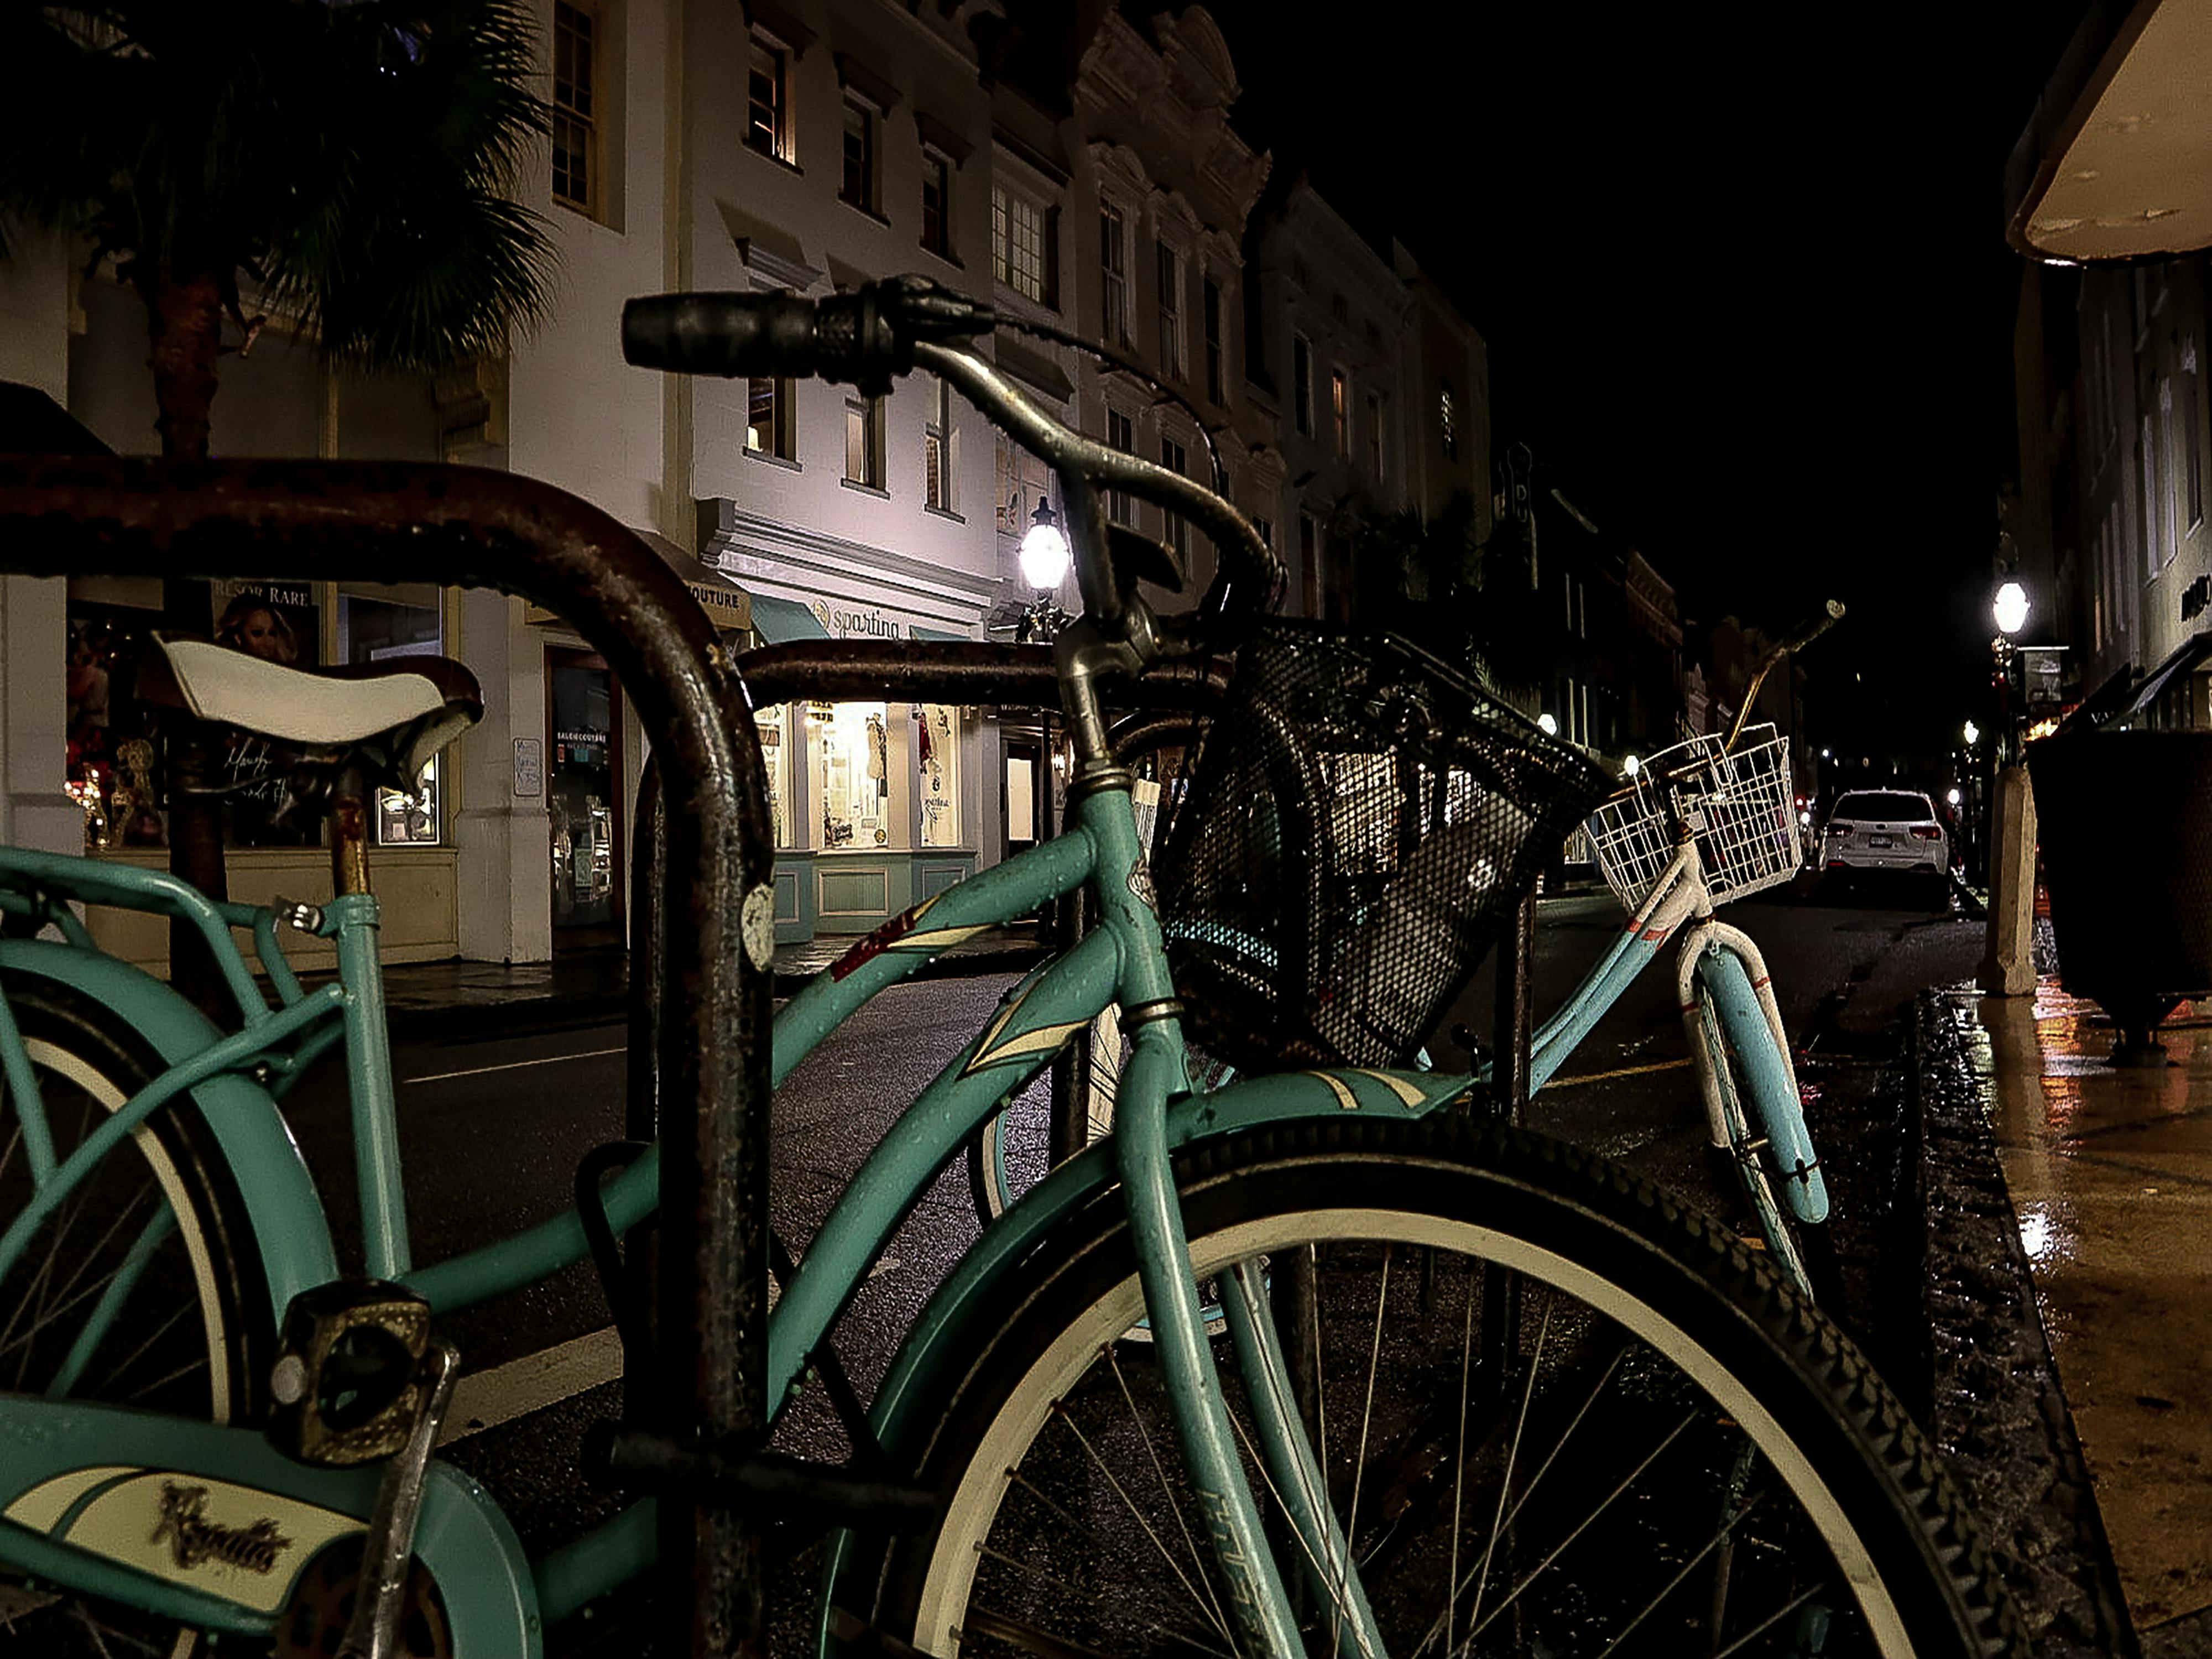 Free stock photo of #bicycle #city #rain #gloomy #vintage #background